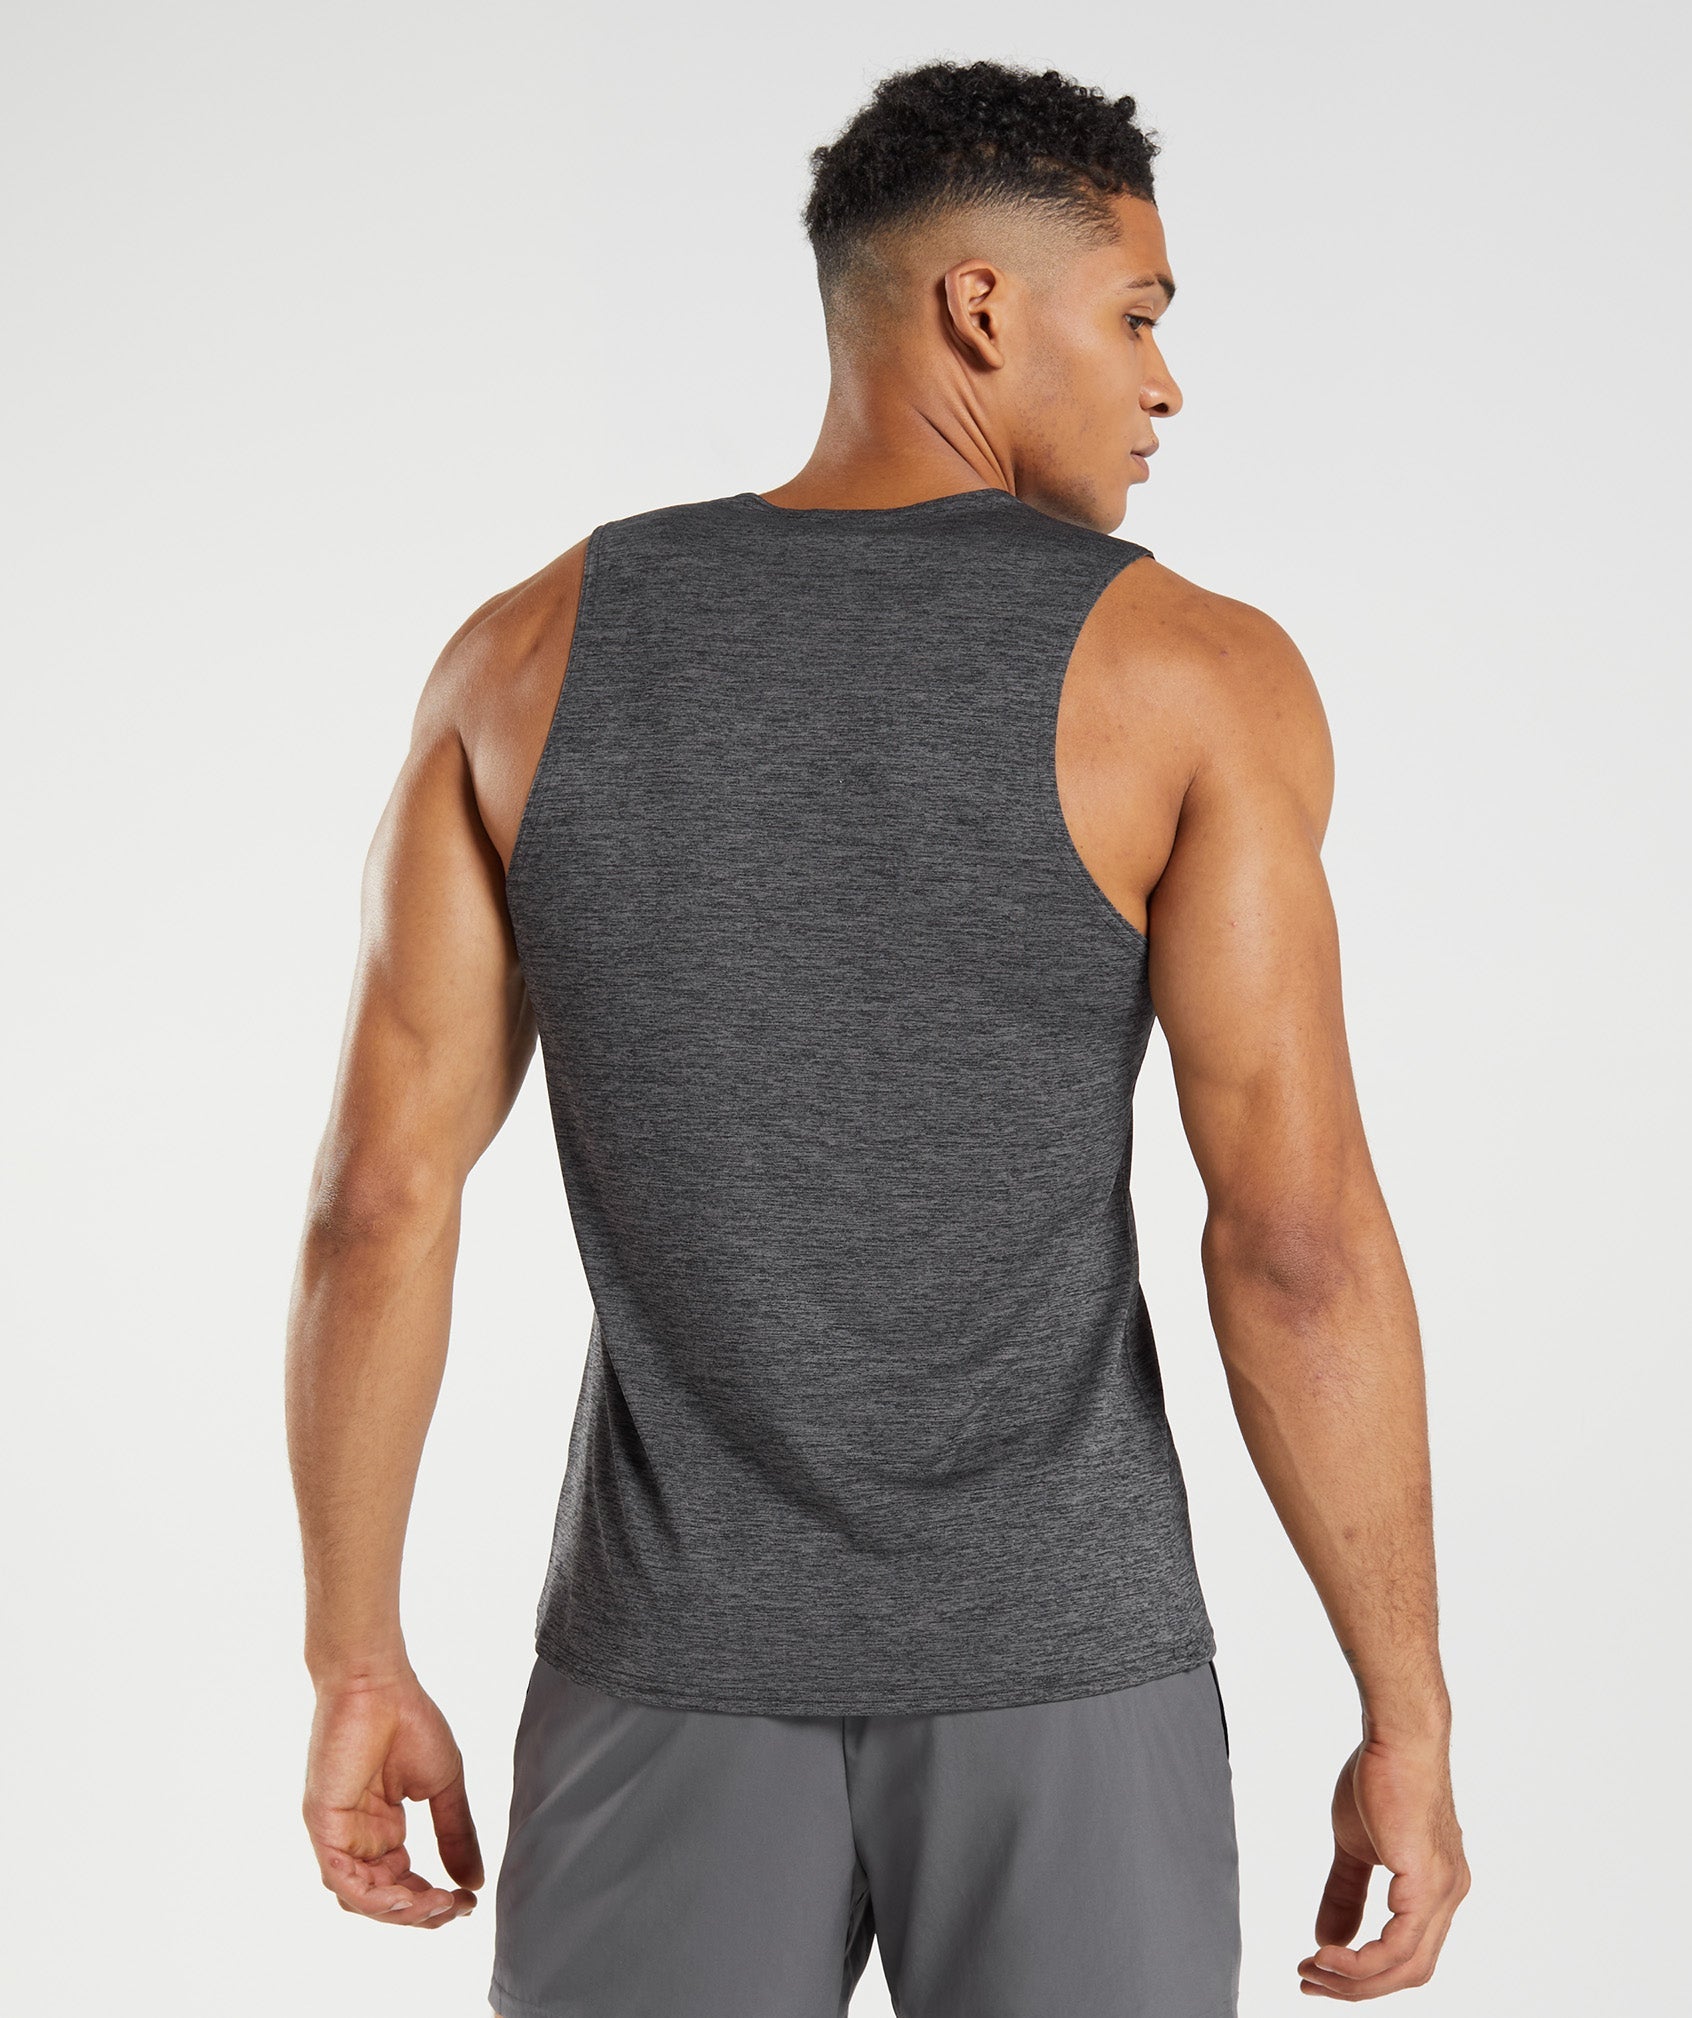 Gymshark Men's Singlet Fitness Shirts Summer Casual Vest Cotton Training  New Sports Running Tank Tops